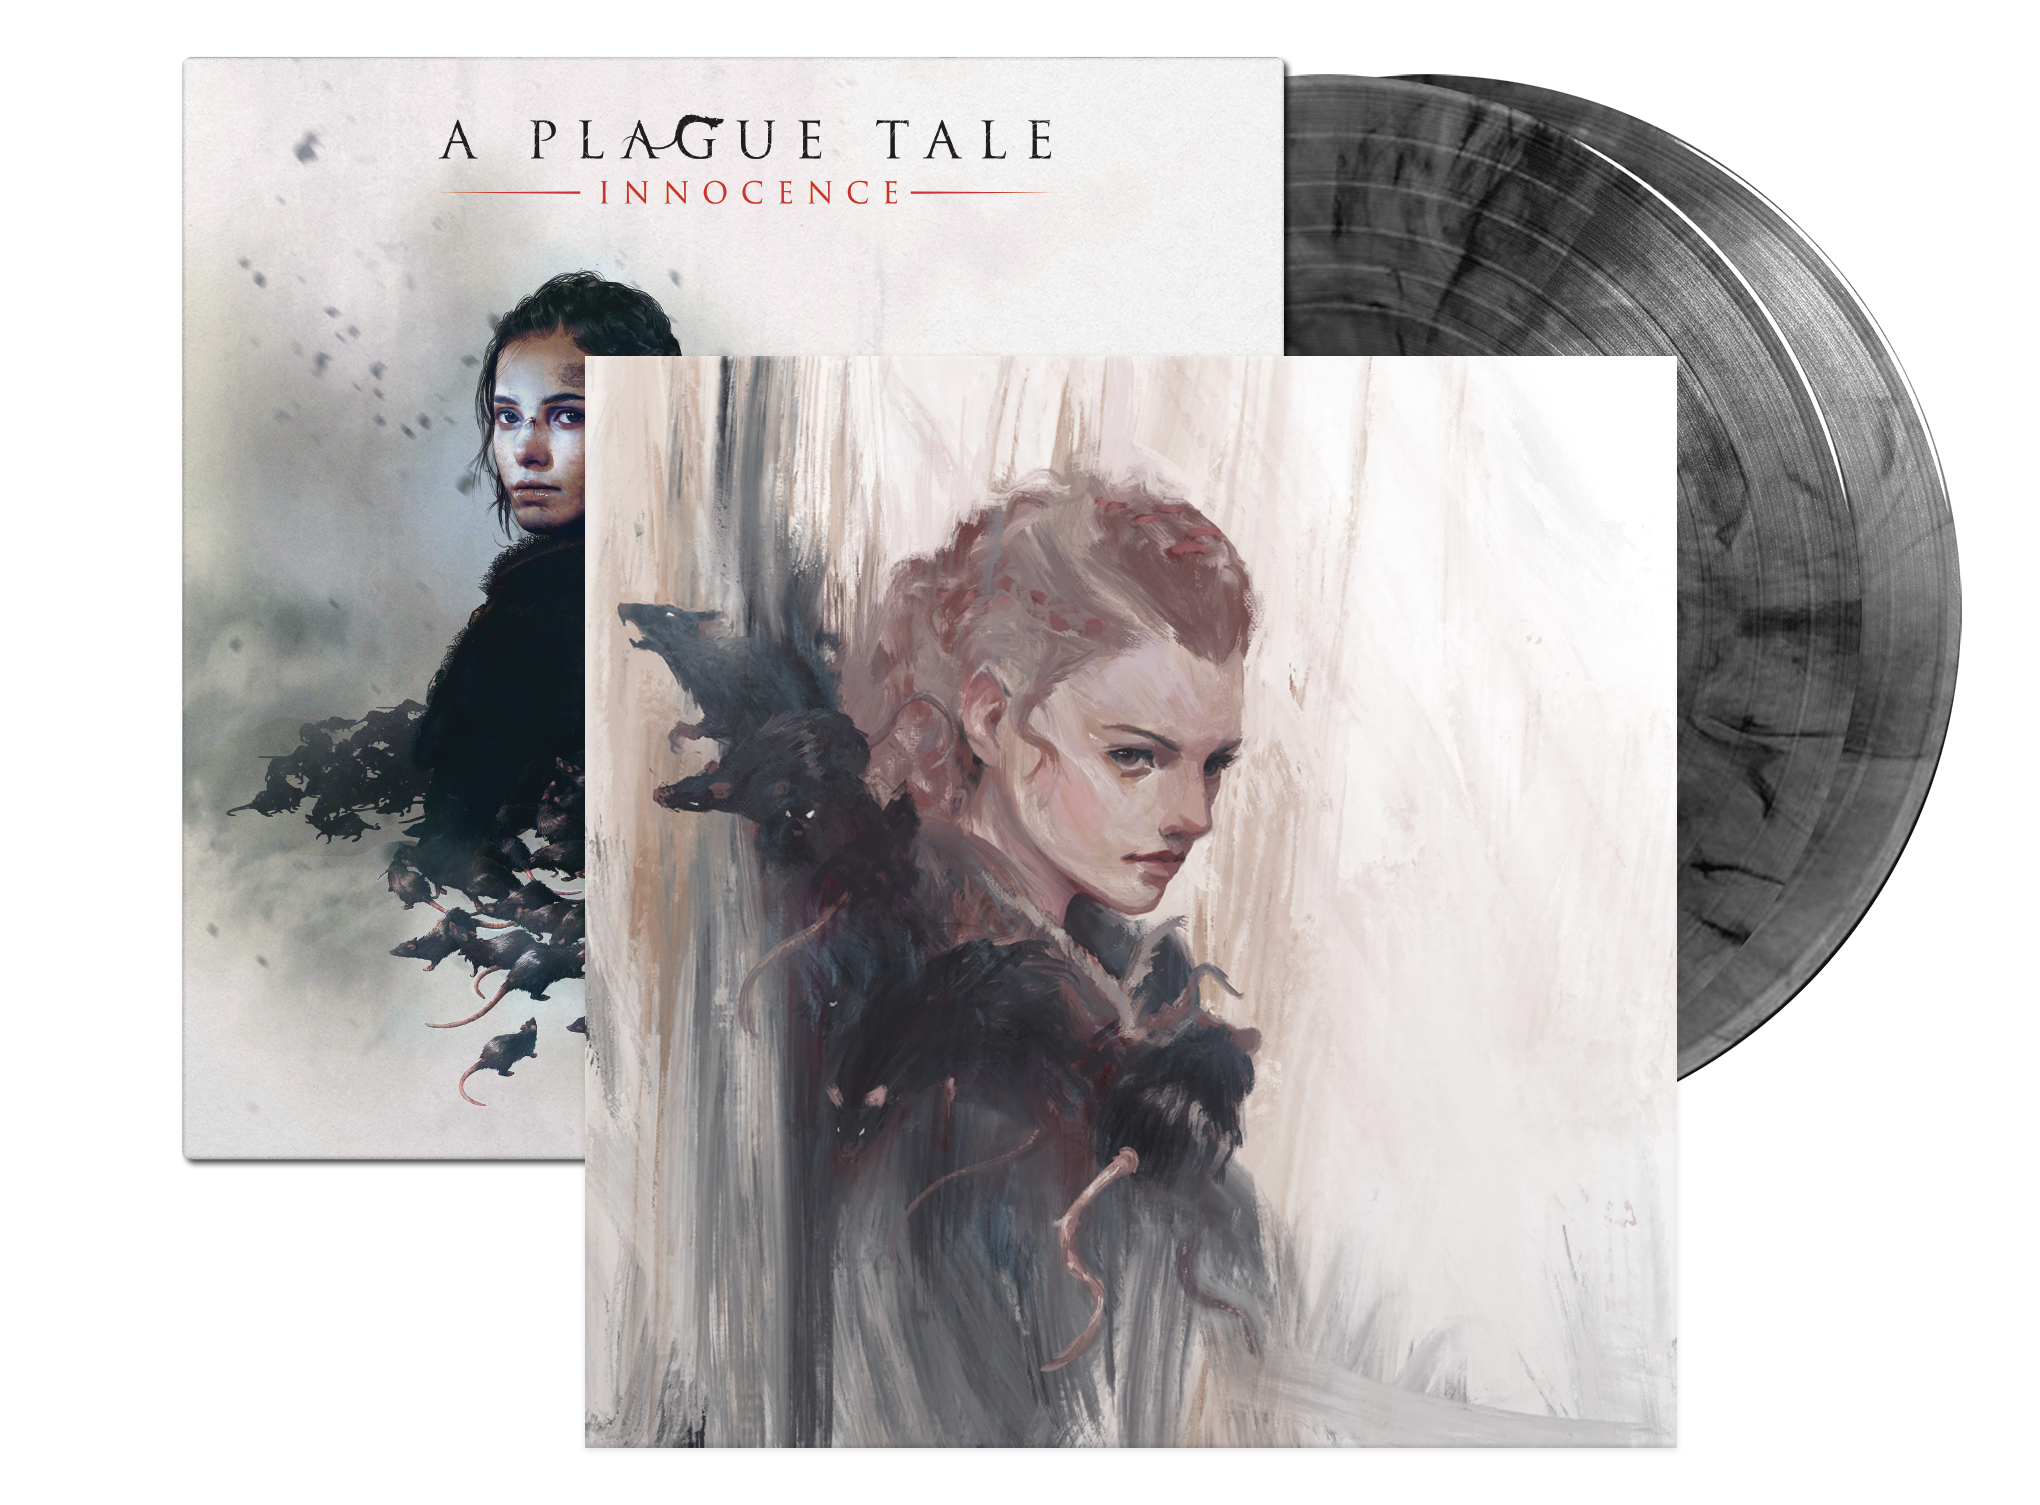 A Plague Tale - A Plague Tale: Innocence OST (Olivier Deriviere) Black &  White - Splattered 2 Vinyl